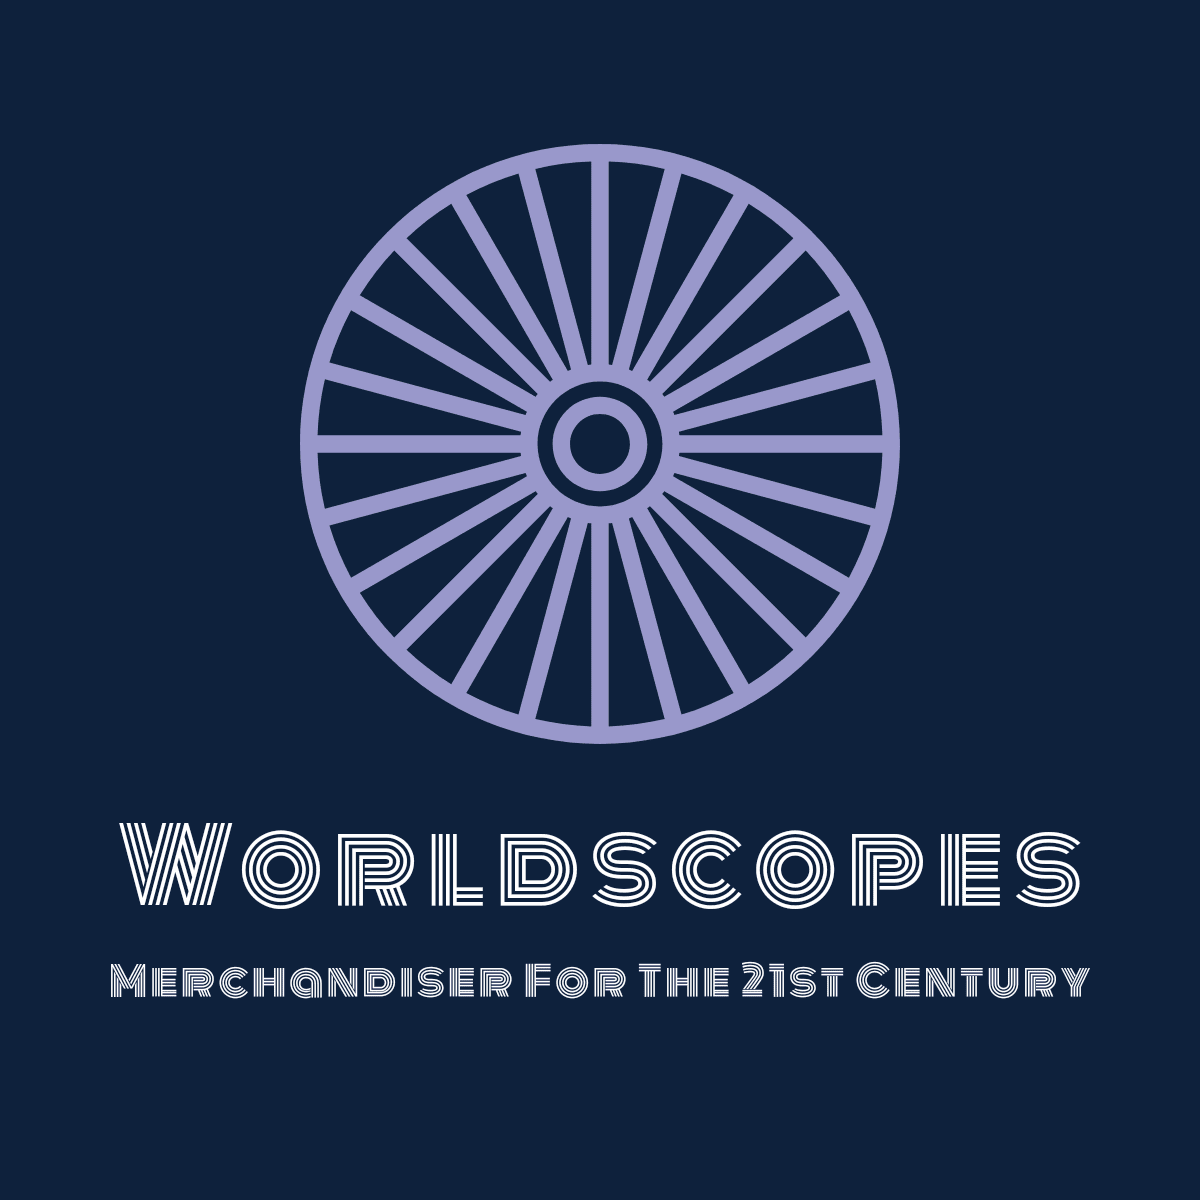 Worldscopes Merchandise